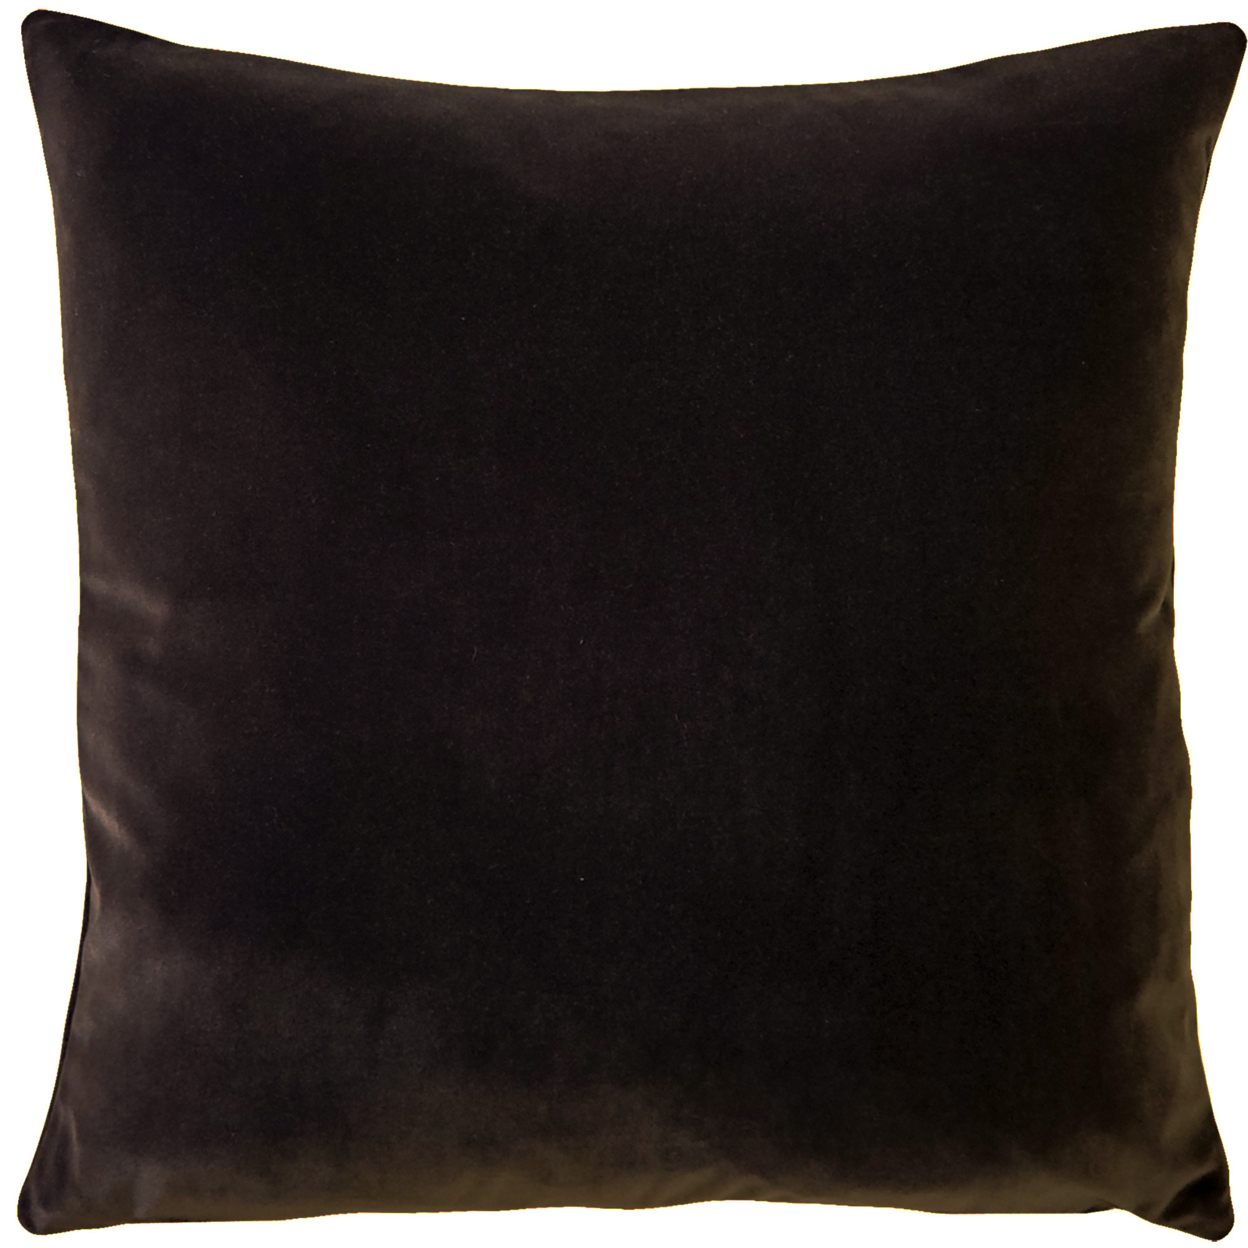 Castello Velvet Throw Pillows, Complete Pillow With Polyfill Pillow Insert (18 Colors, 3 Sizes) - Burgundy, 17x17